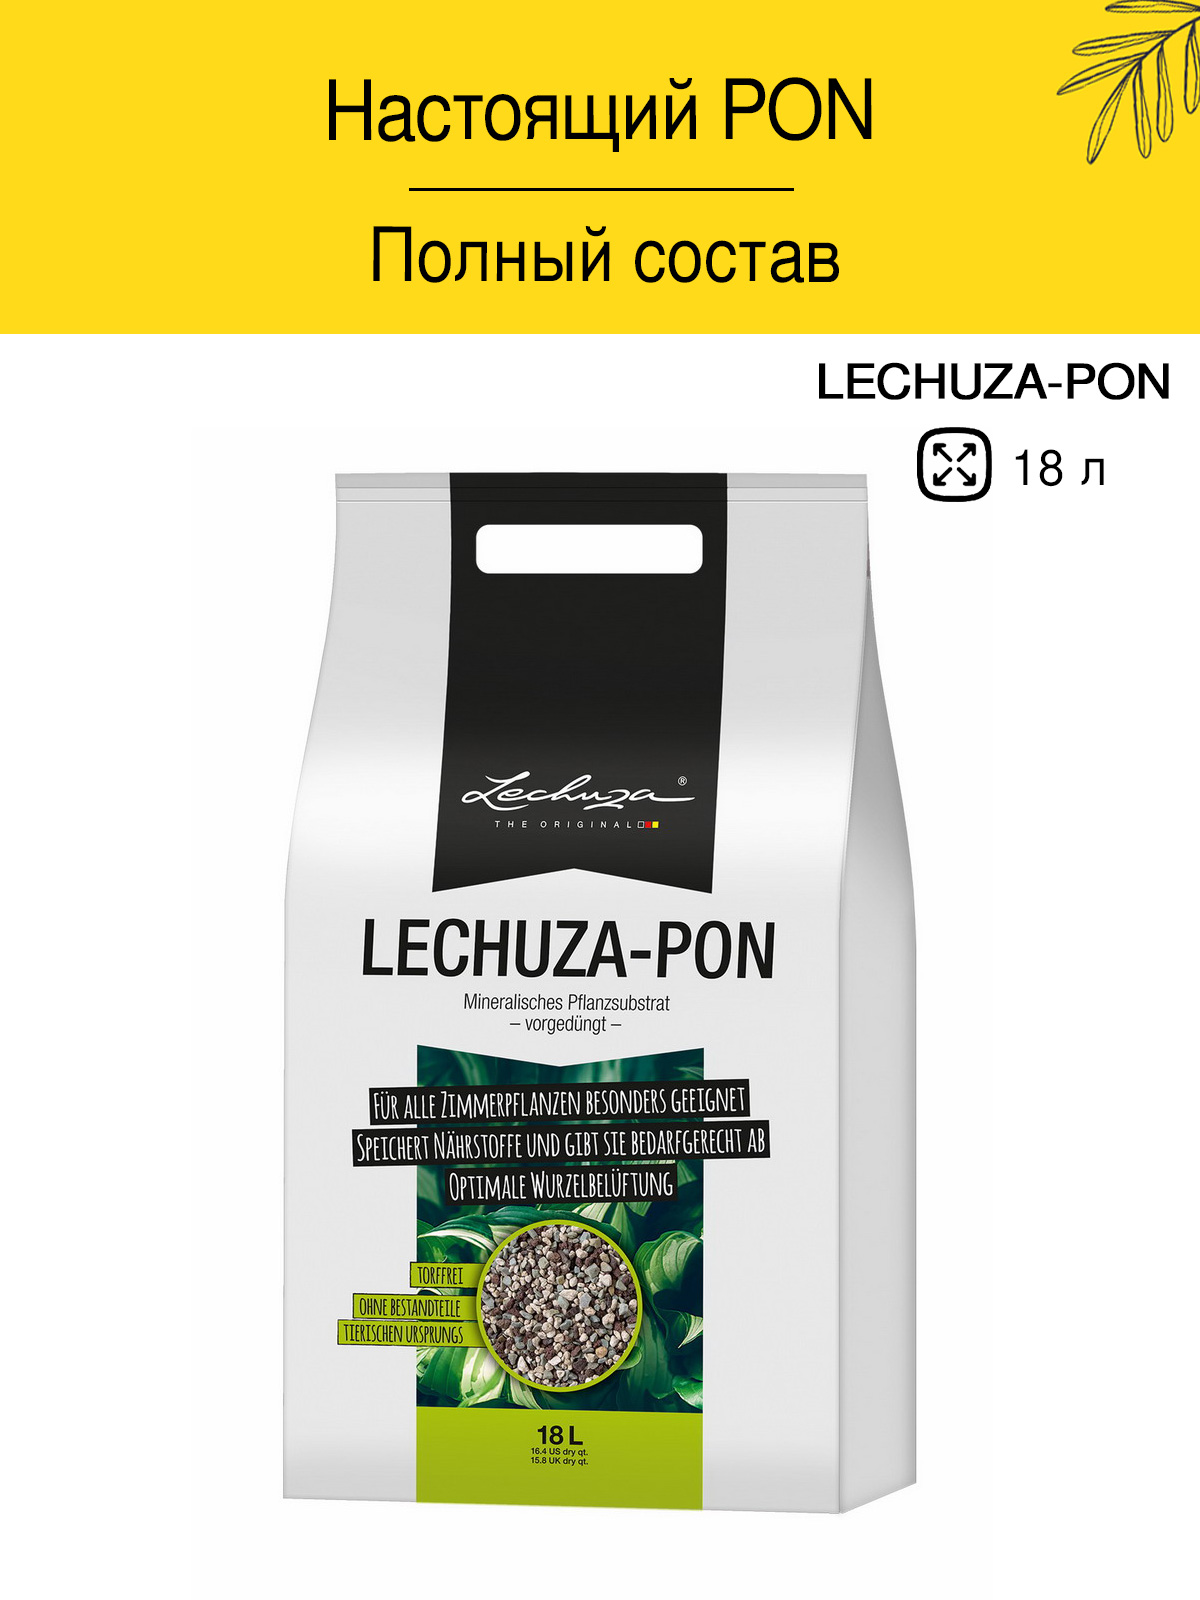 Lechuza-Pon